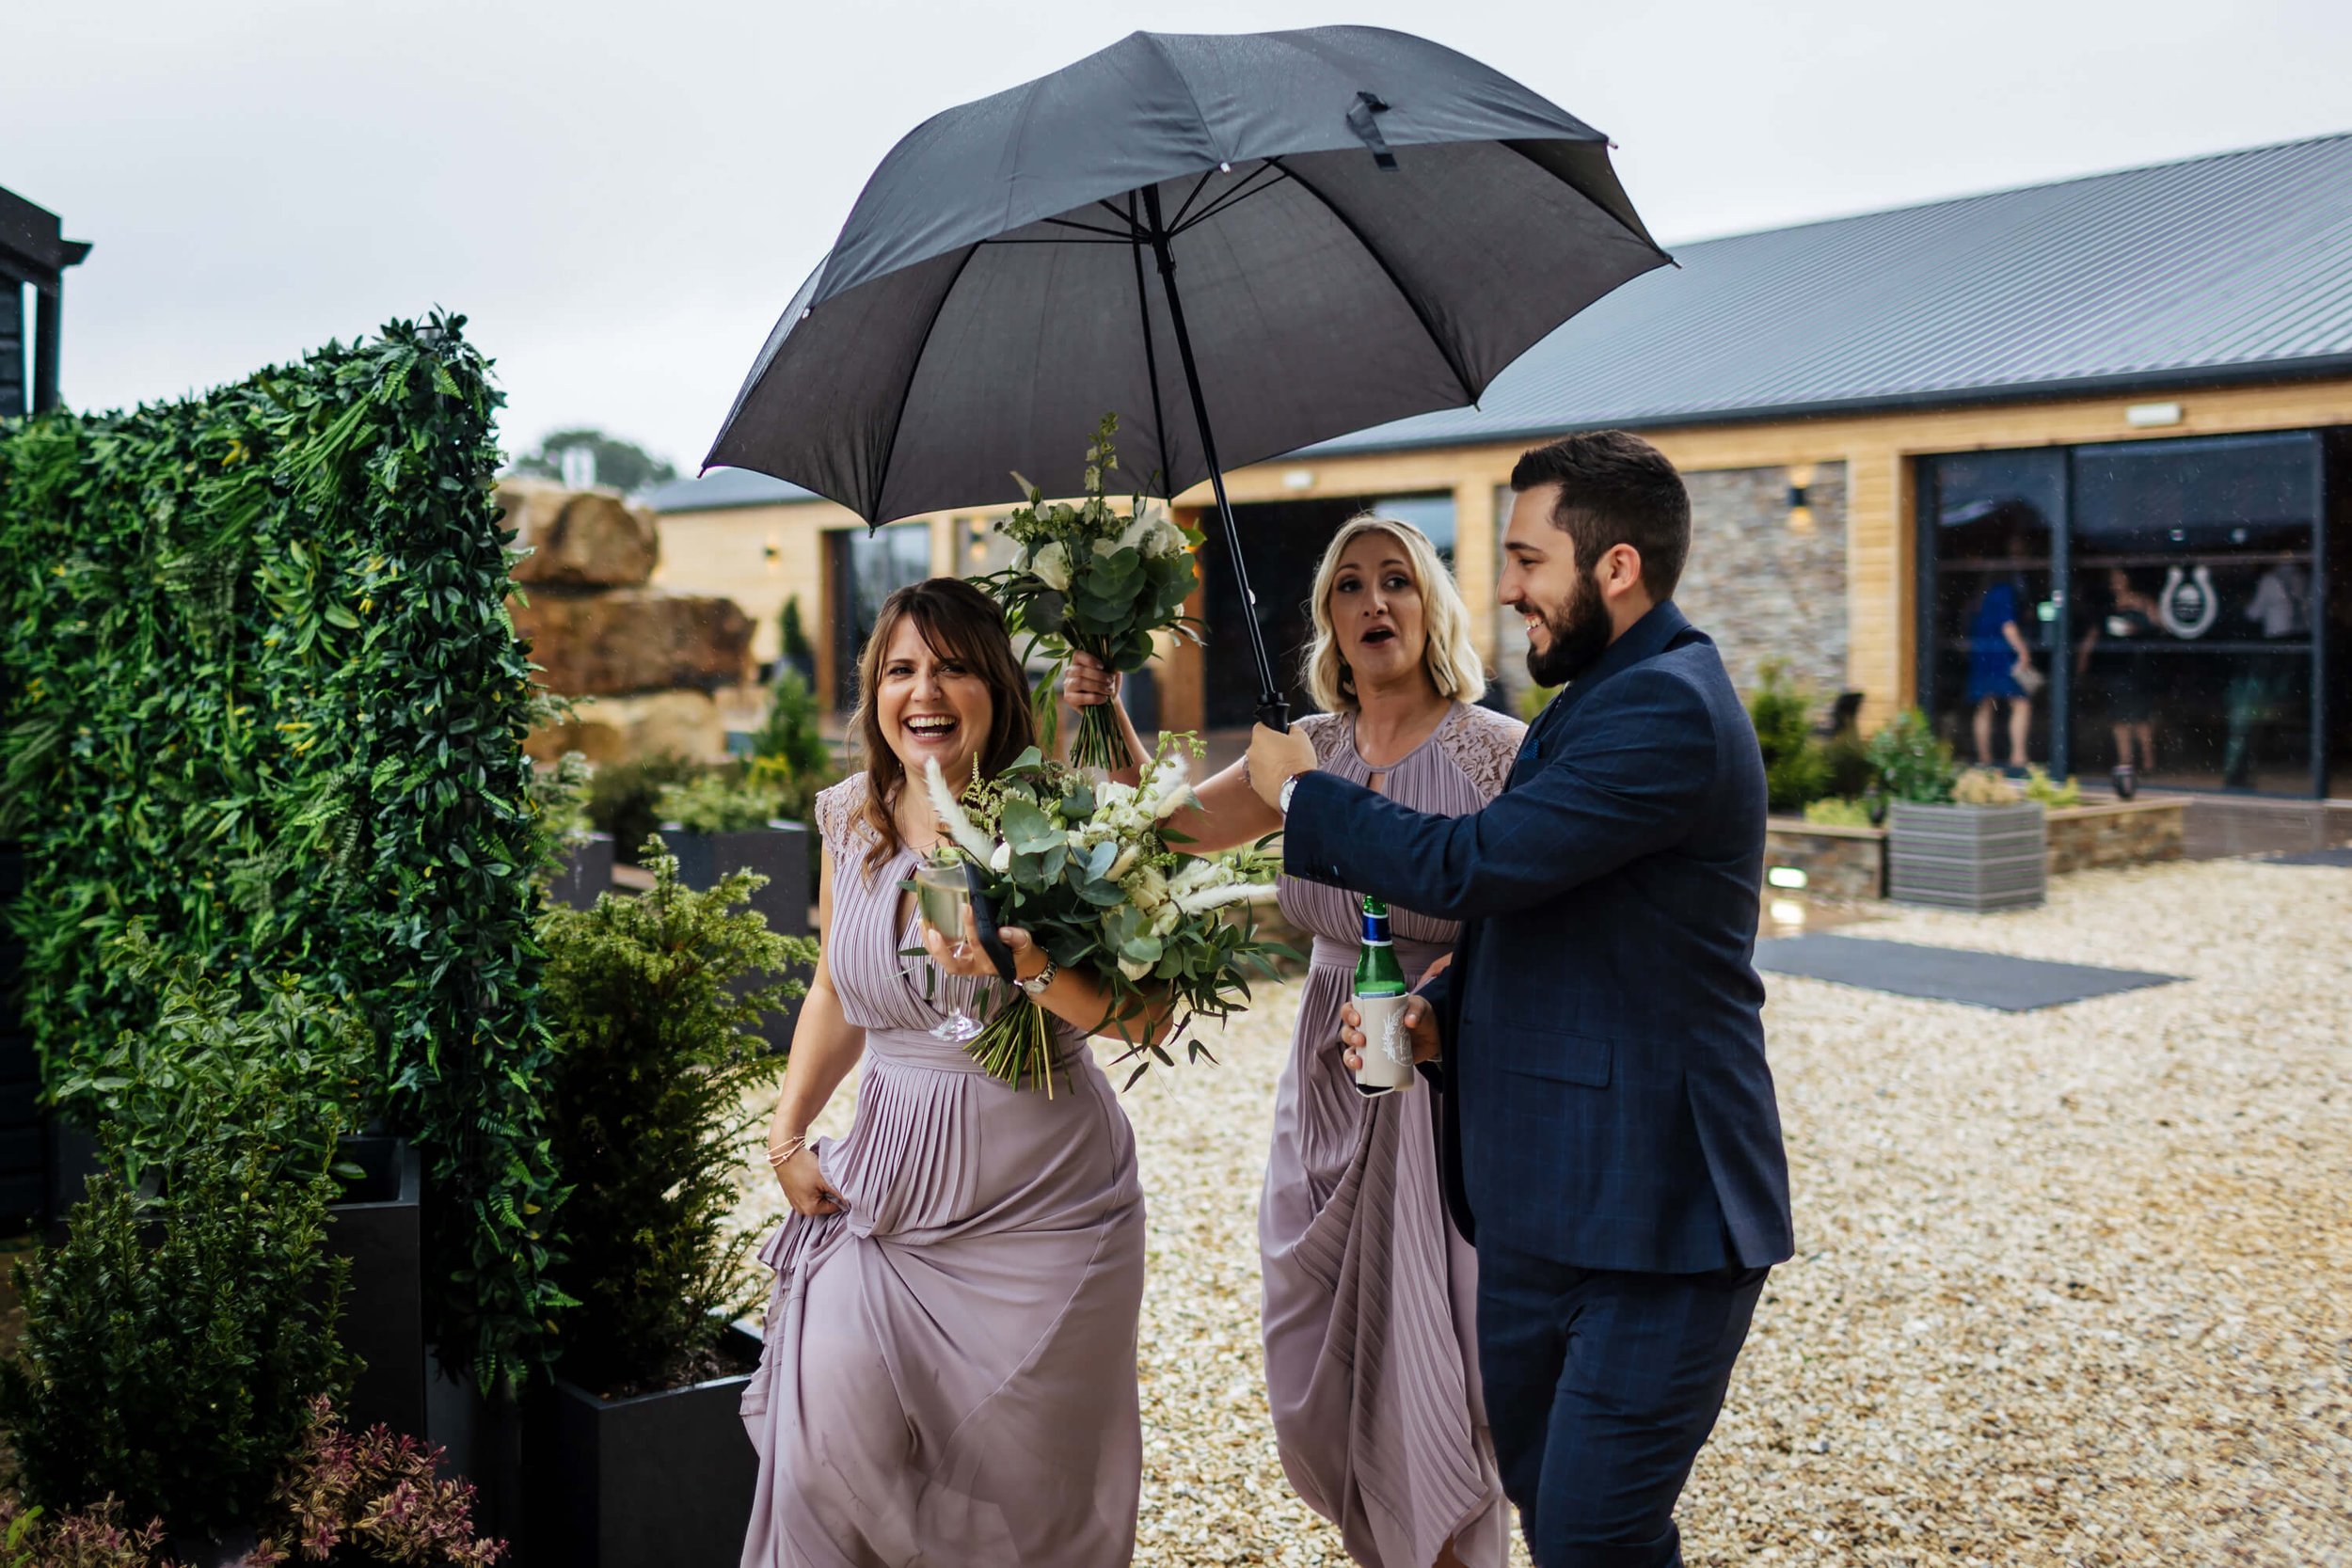 Bridesmaids under the umbrella at the wedding